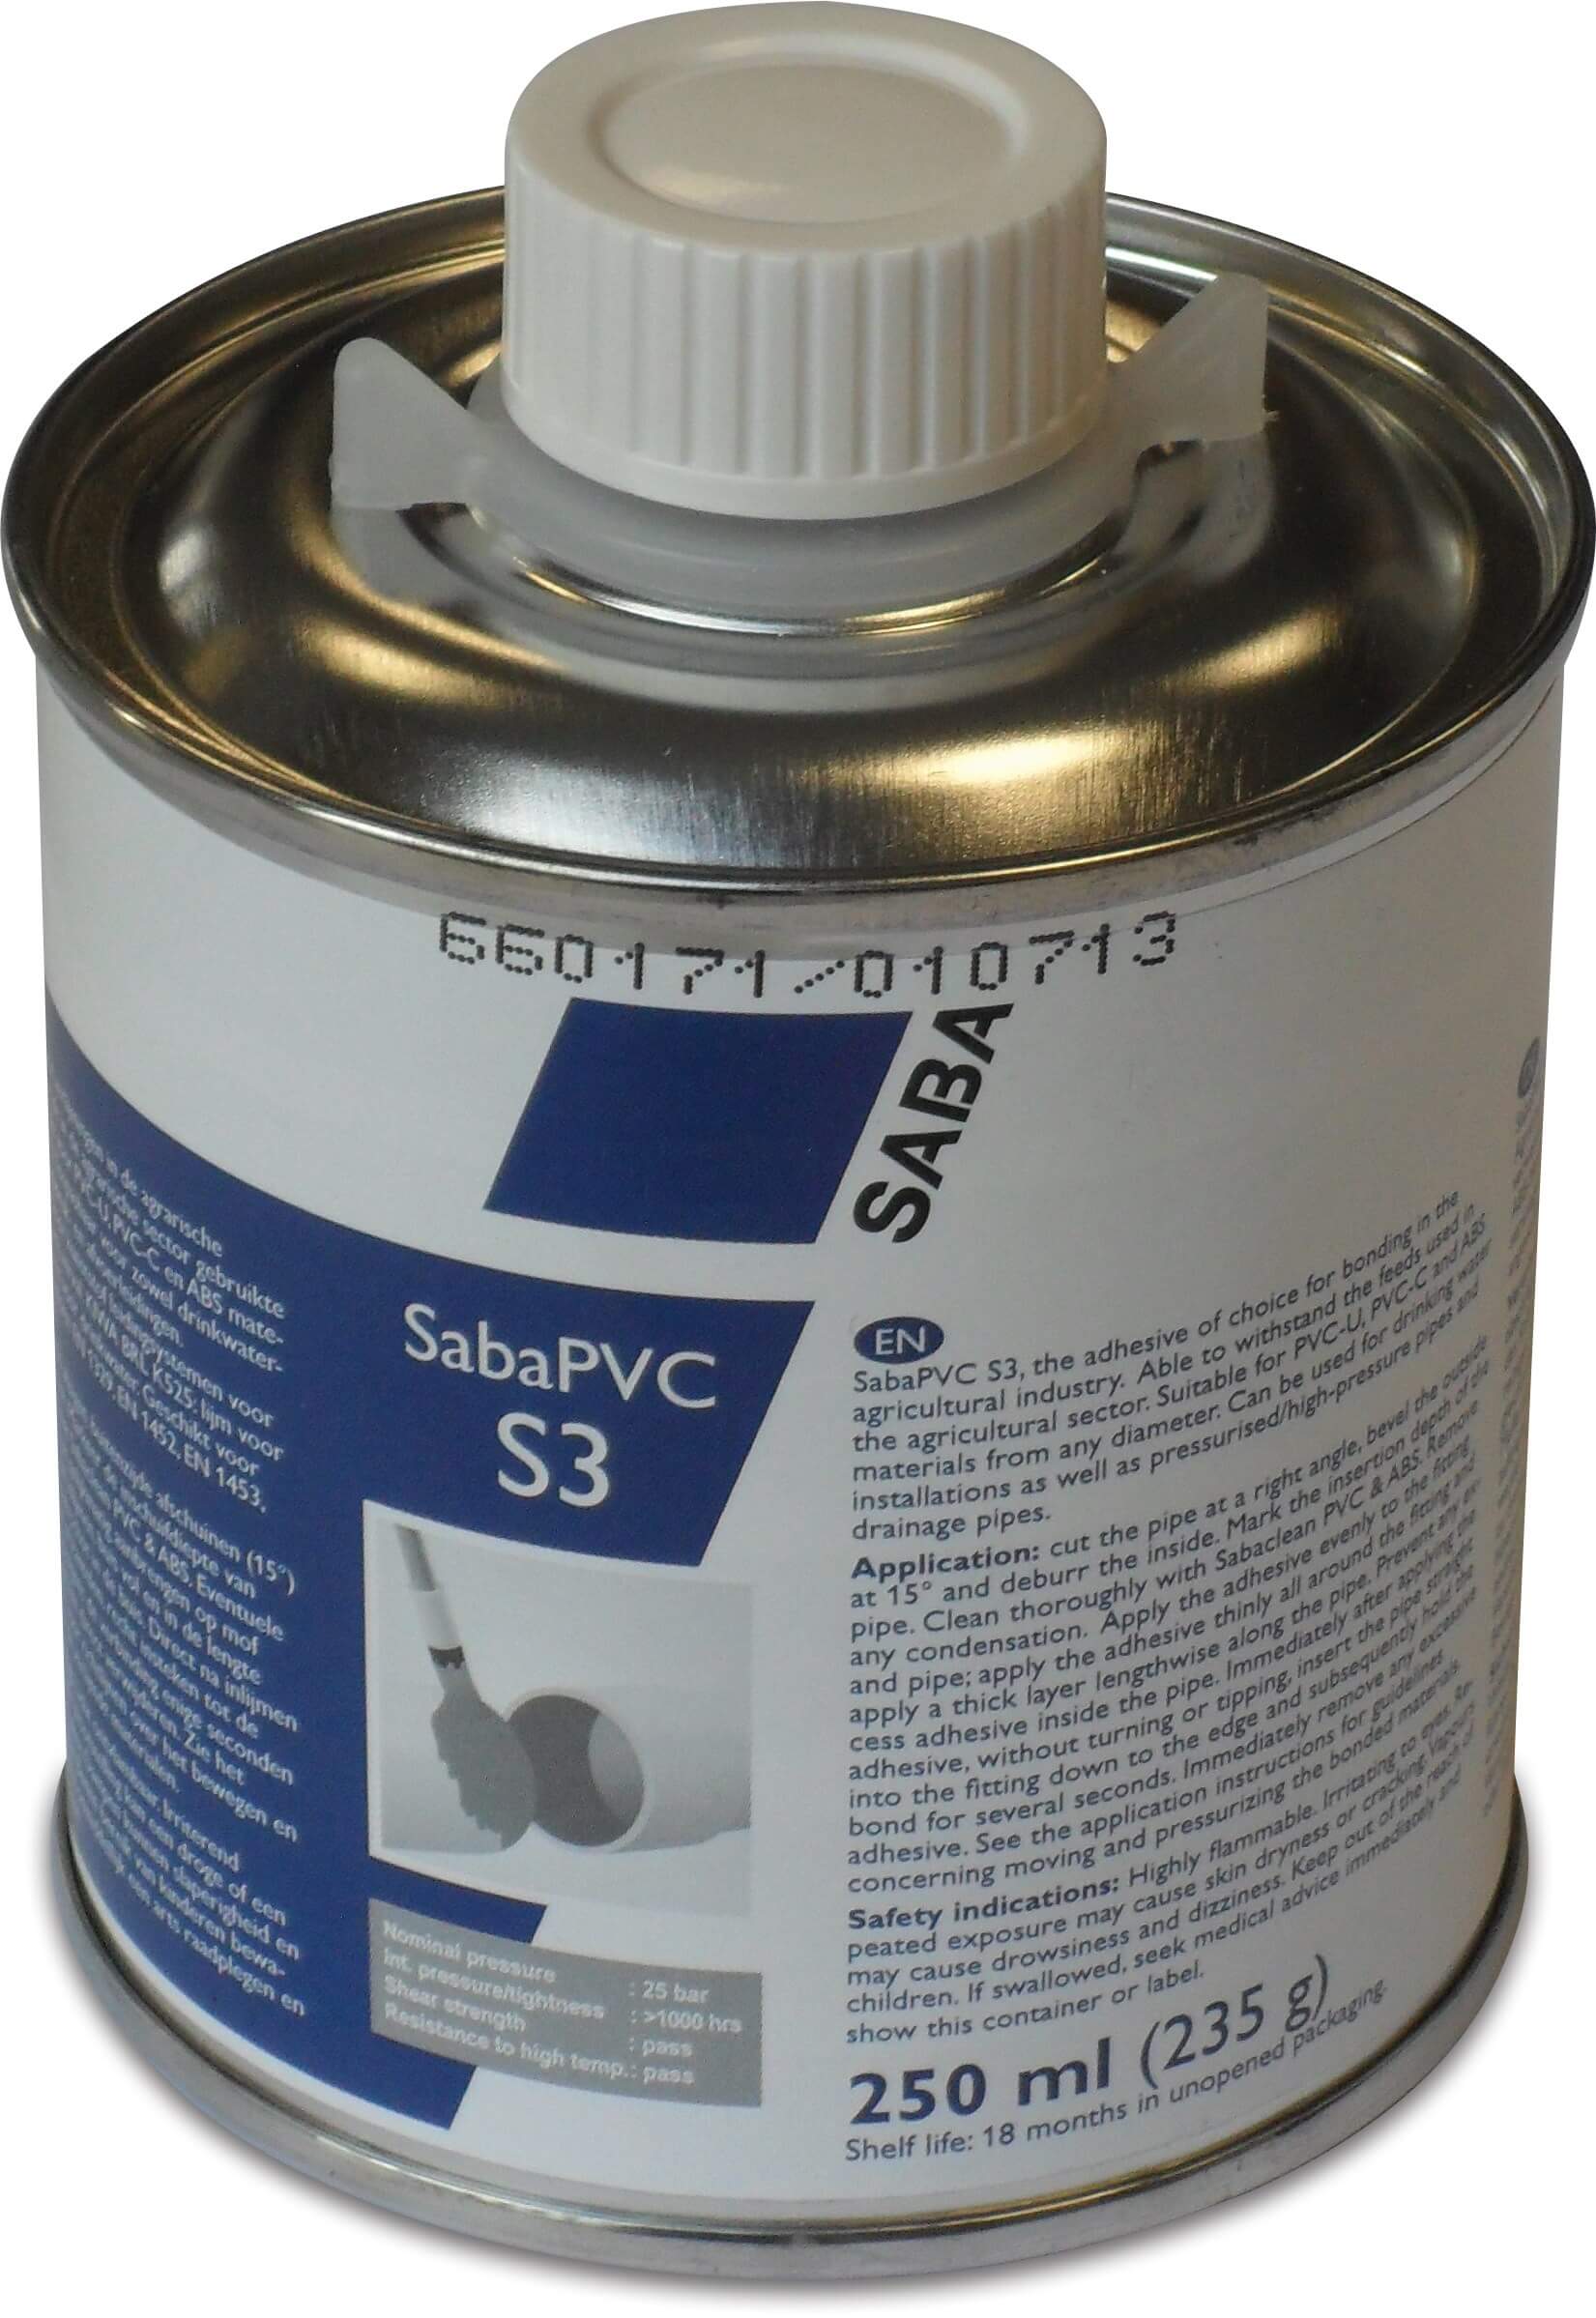 Saba PVC glue 5ltr KIWA type SabaPVC S3